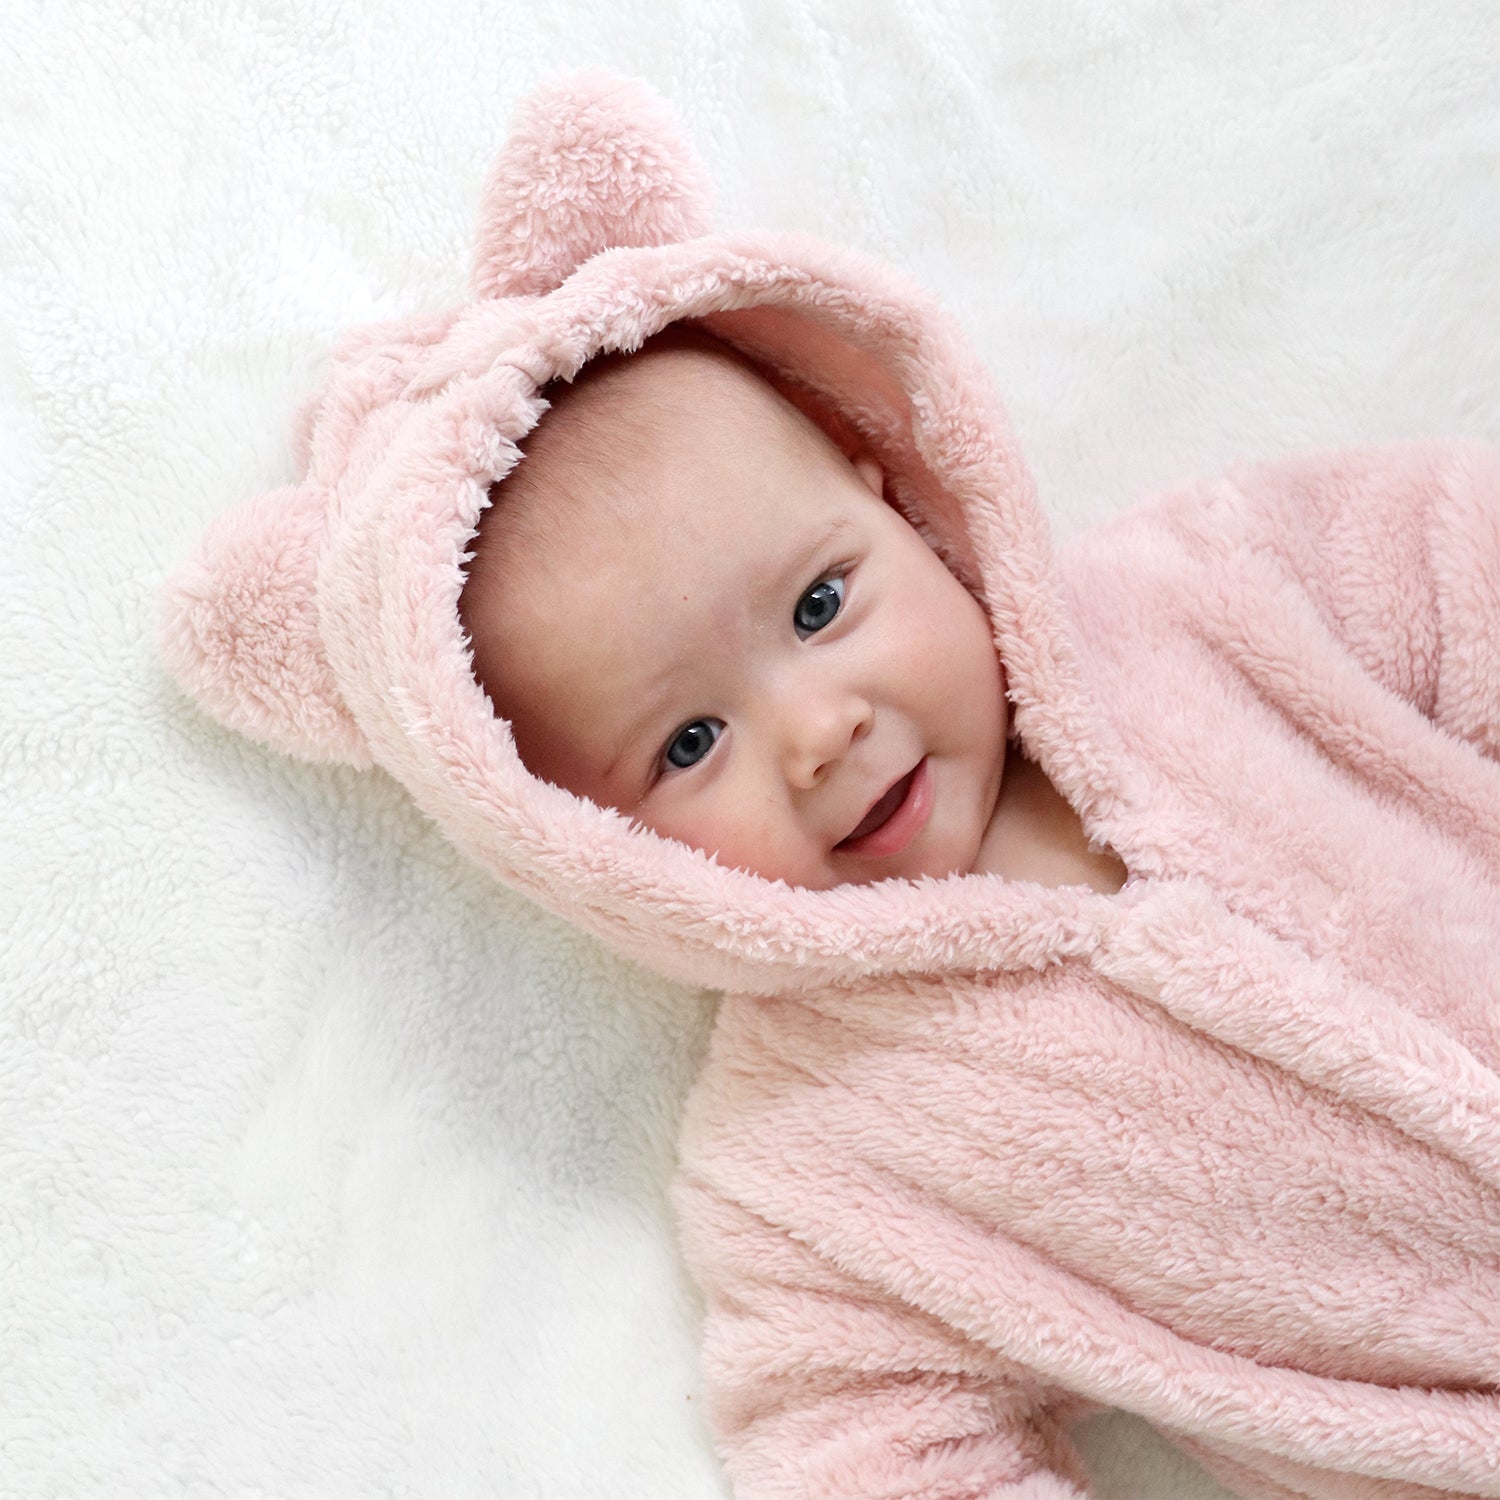 AV1870 Tiny baby bear star printed onesie pink